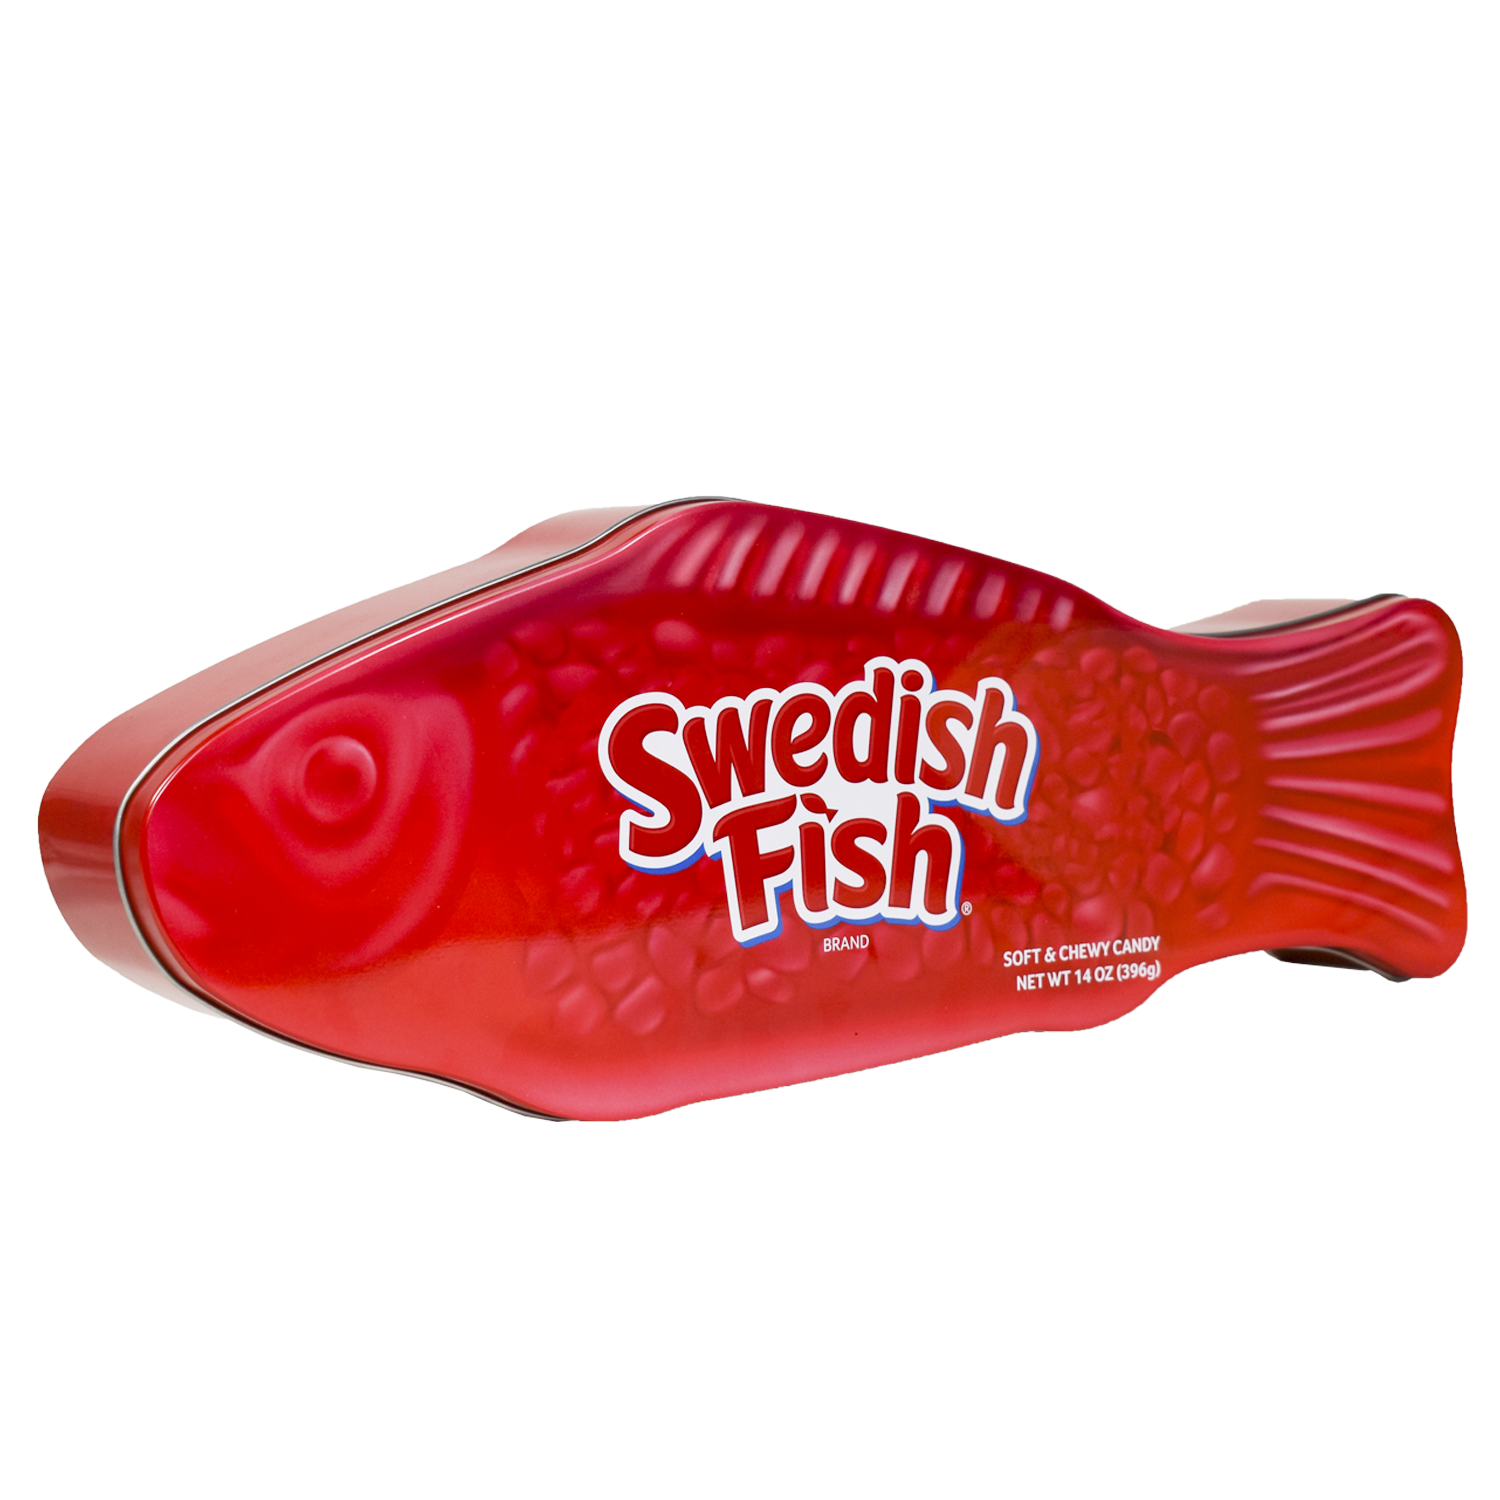 IT'SUGAR Giant Swedish Fish Candy Gift Tin - Macy's